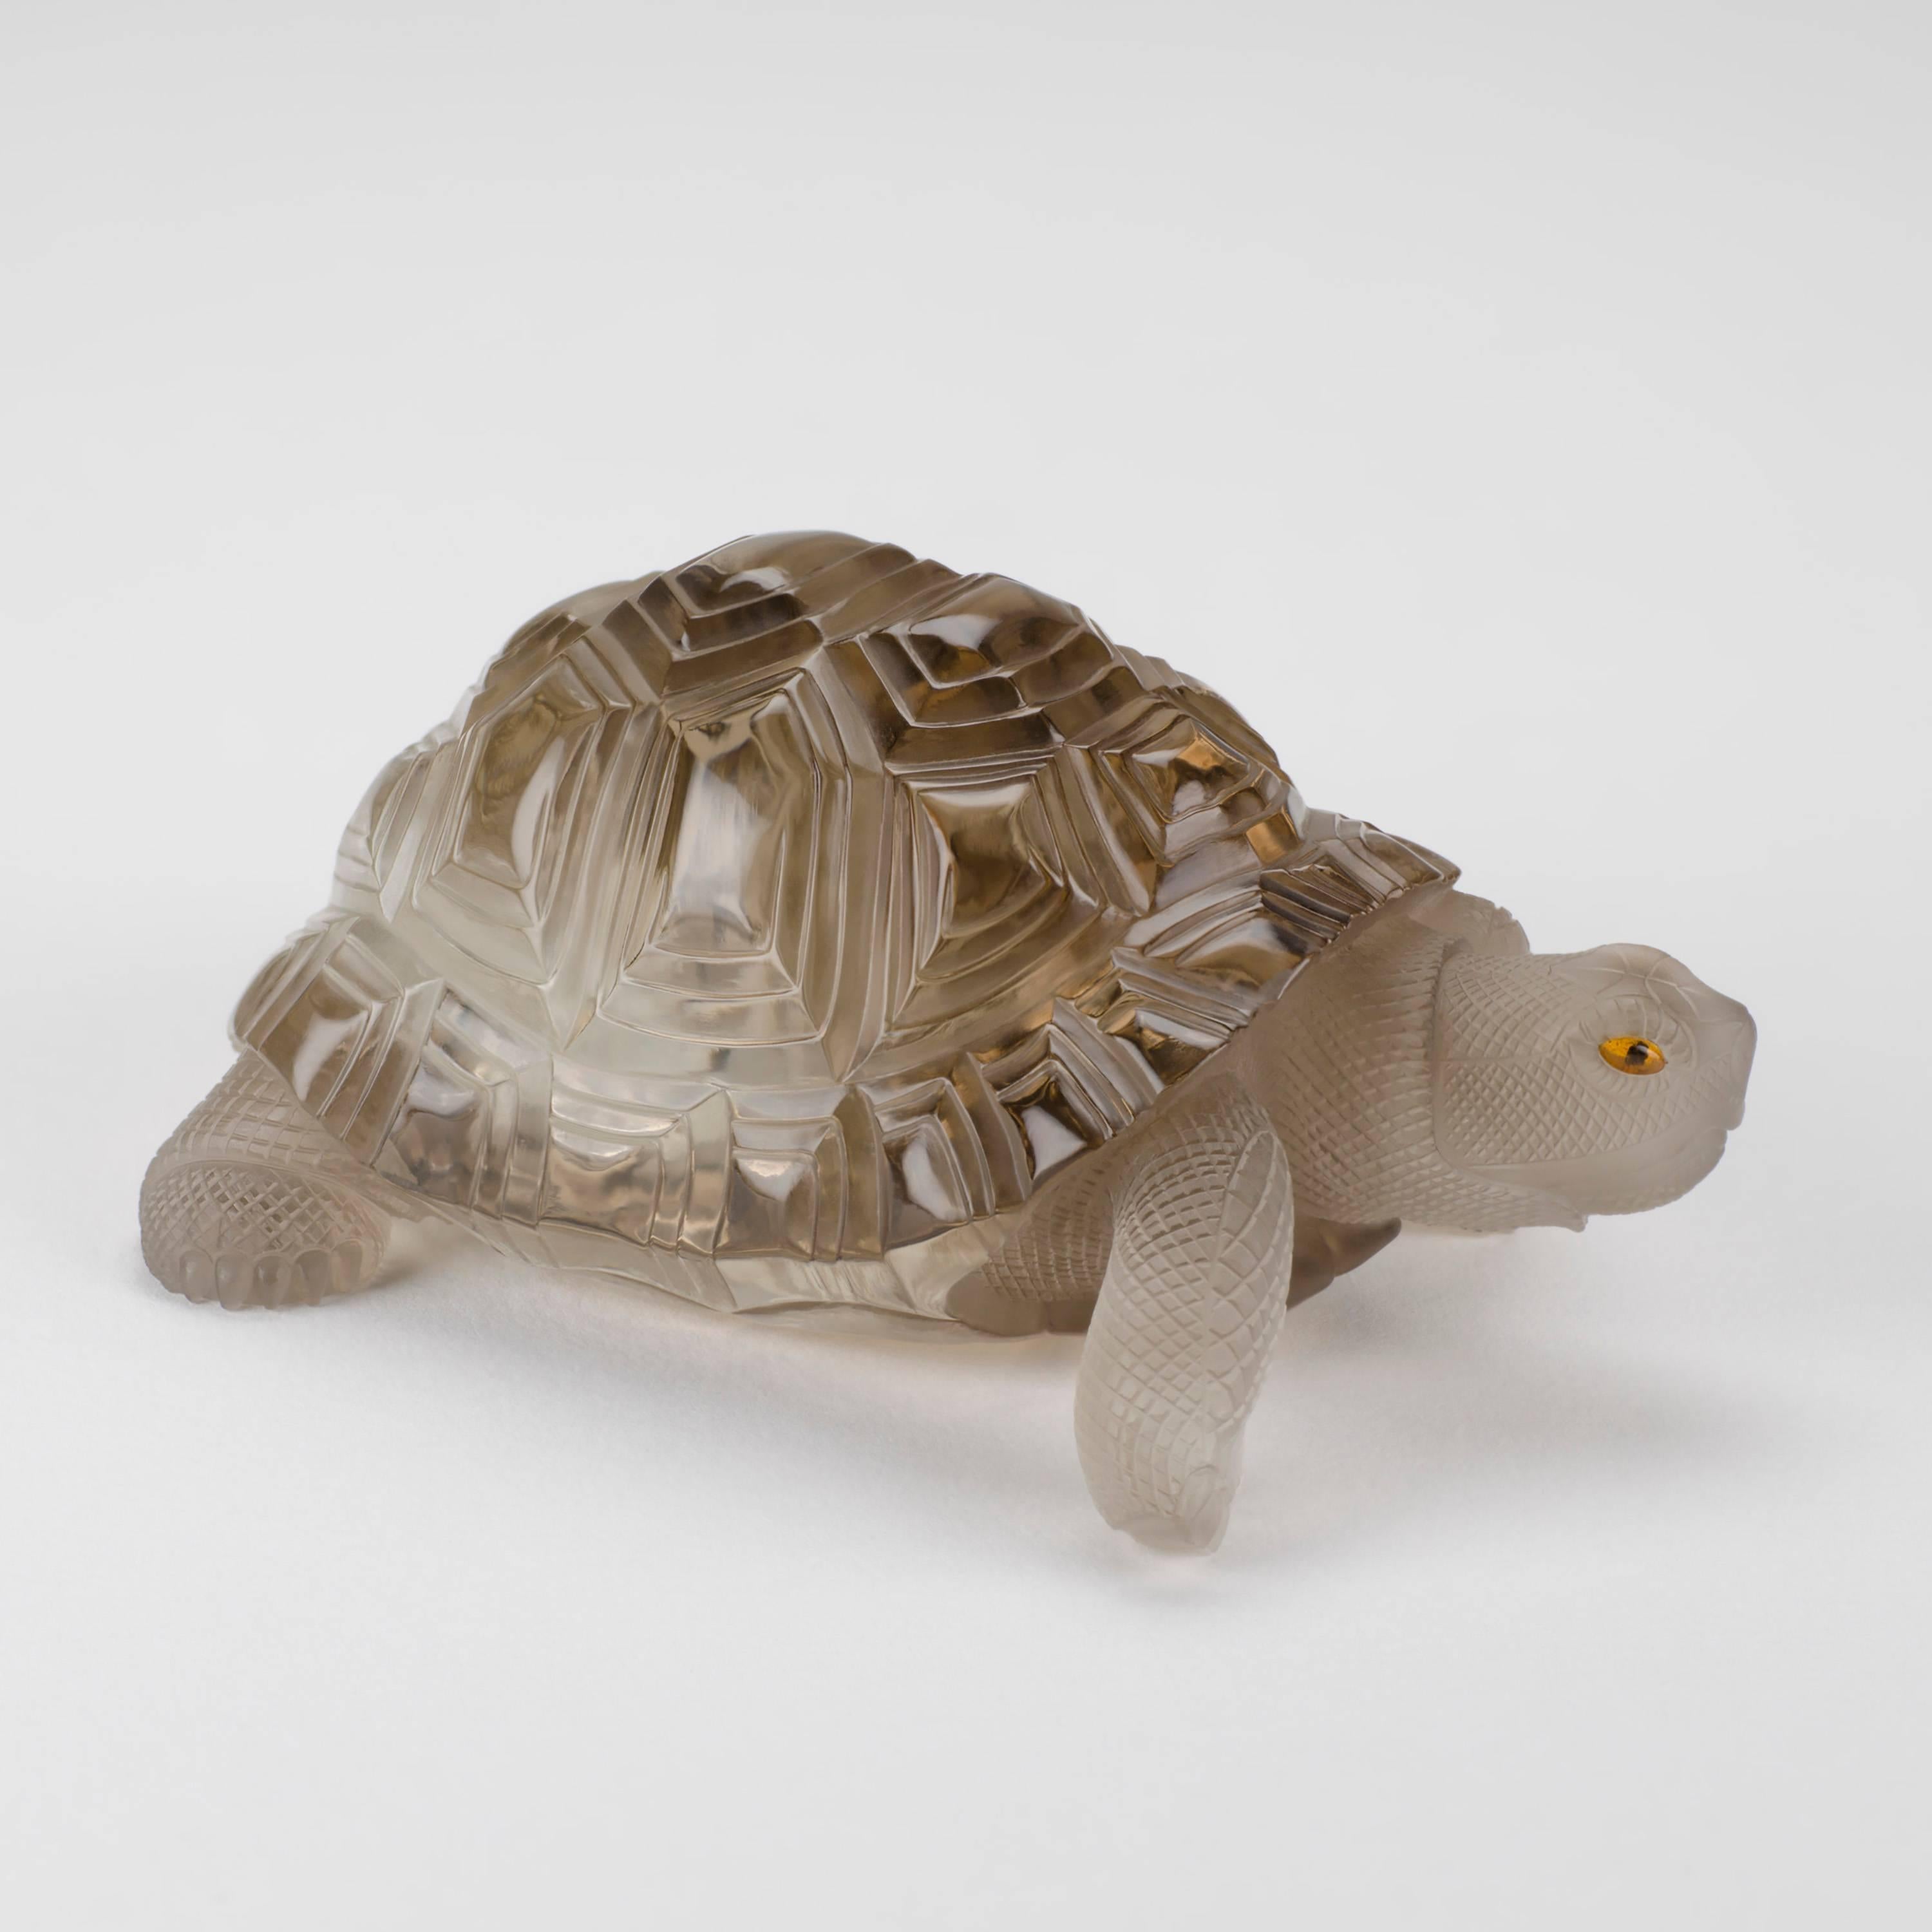 Women's or Men's Detailed Smokey Quartz Turtle Sculpture For Sale